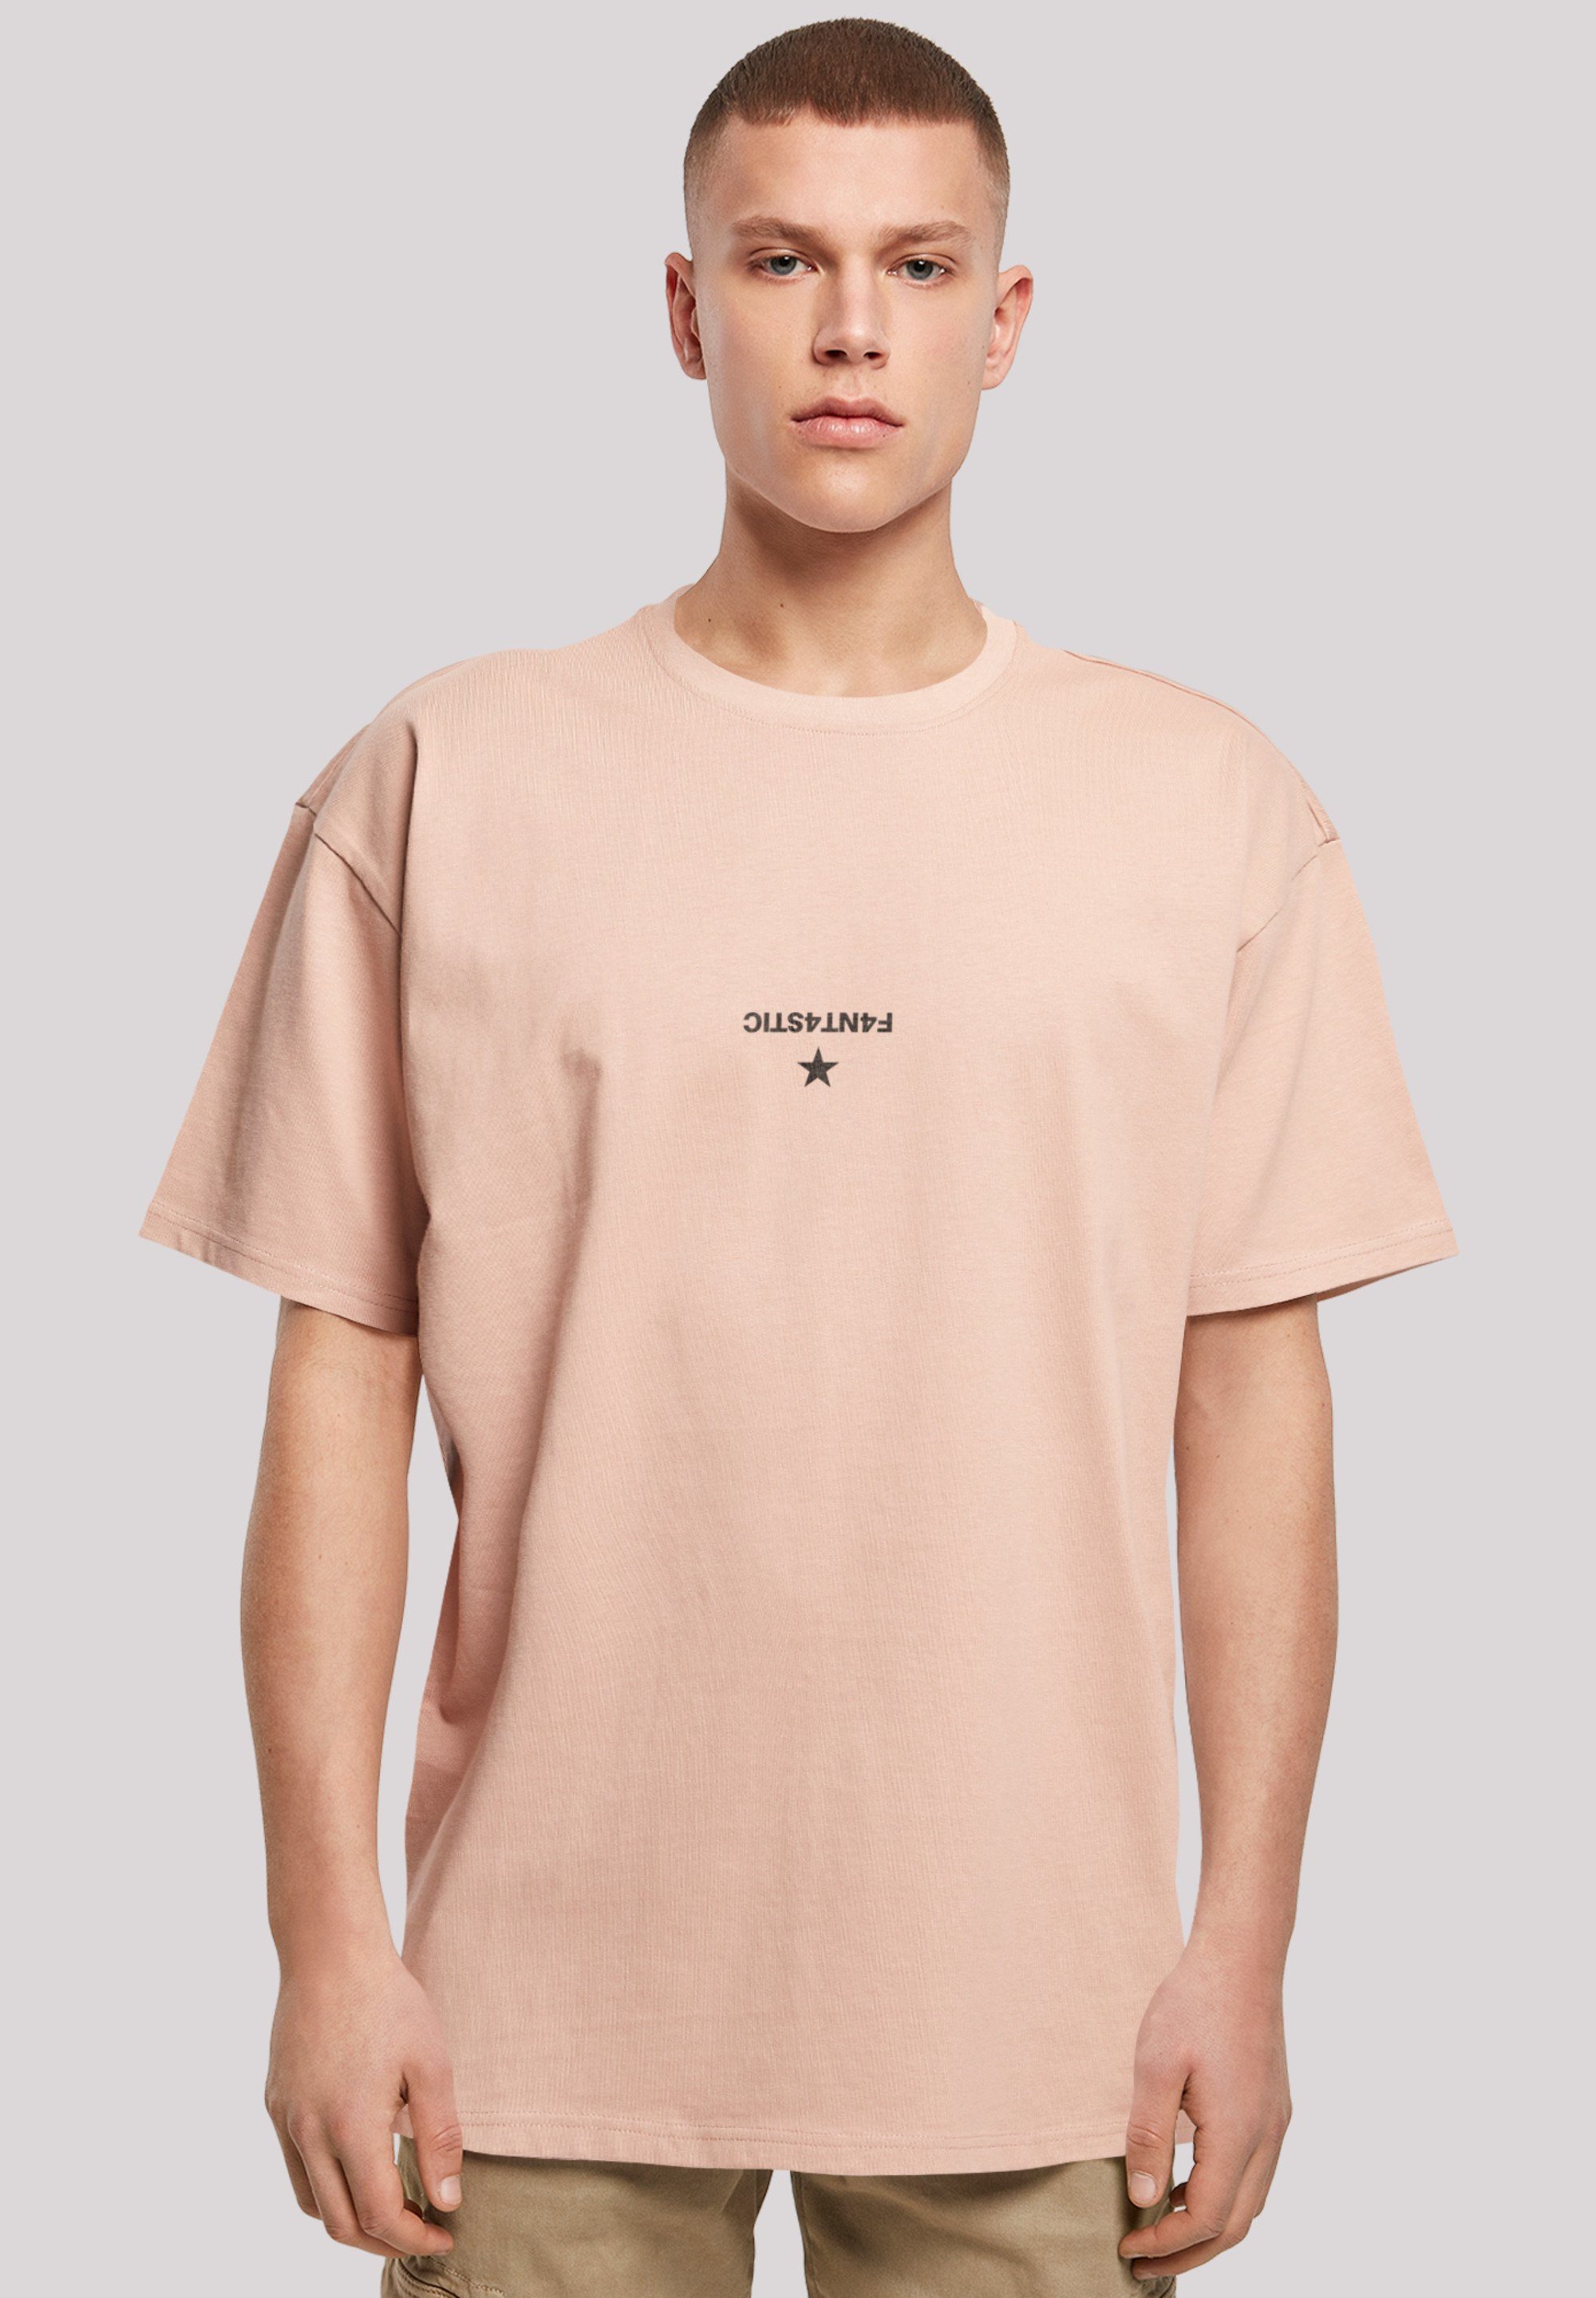 amber Abstract T-Shirt Print Geometric F4NT4STIC